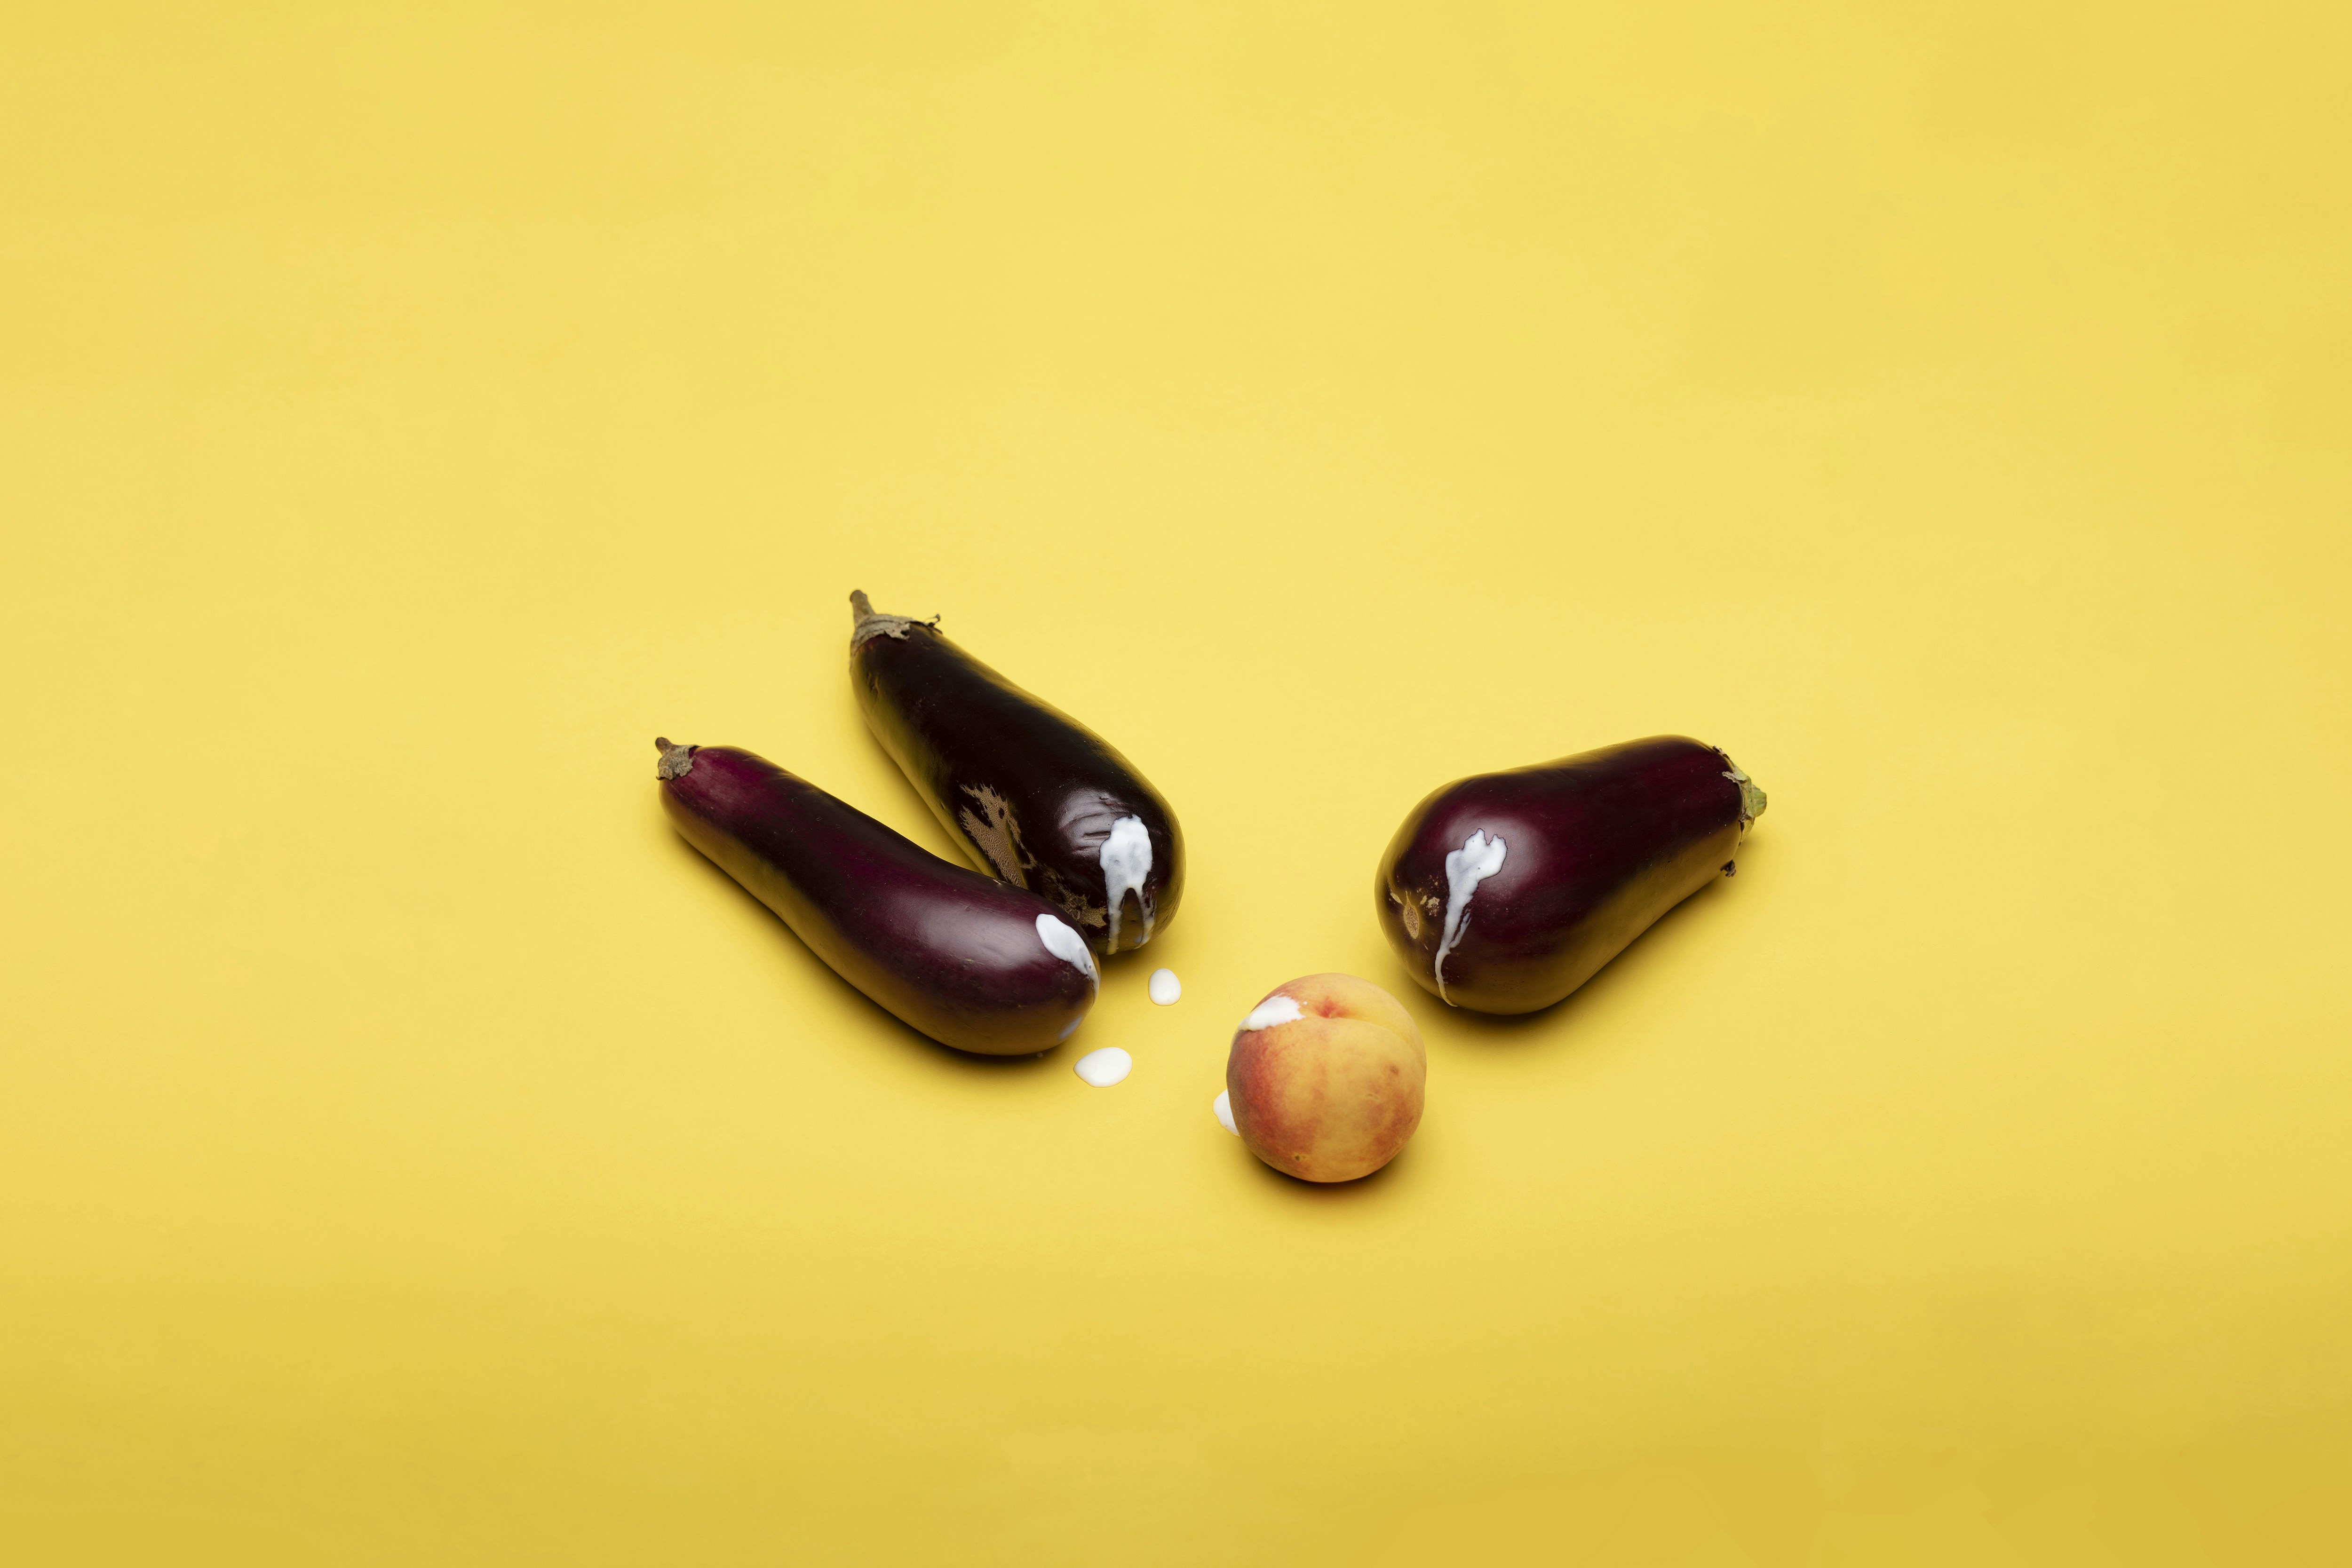 eggplants and peach sex